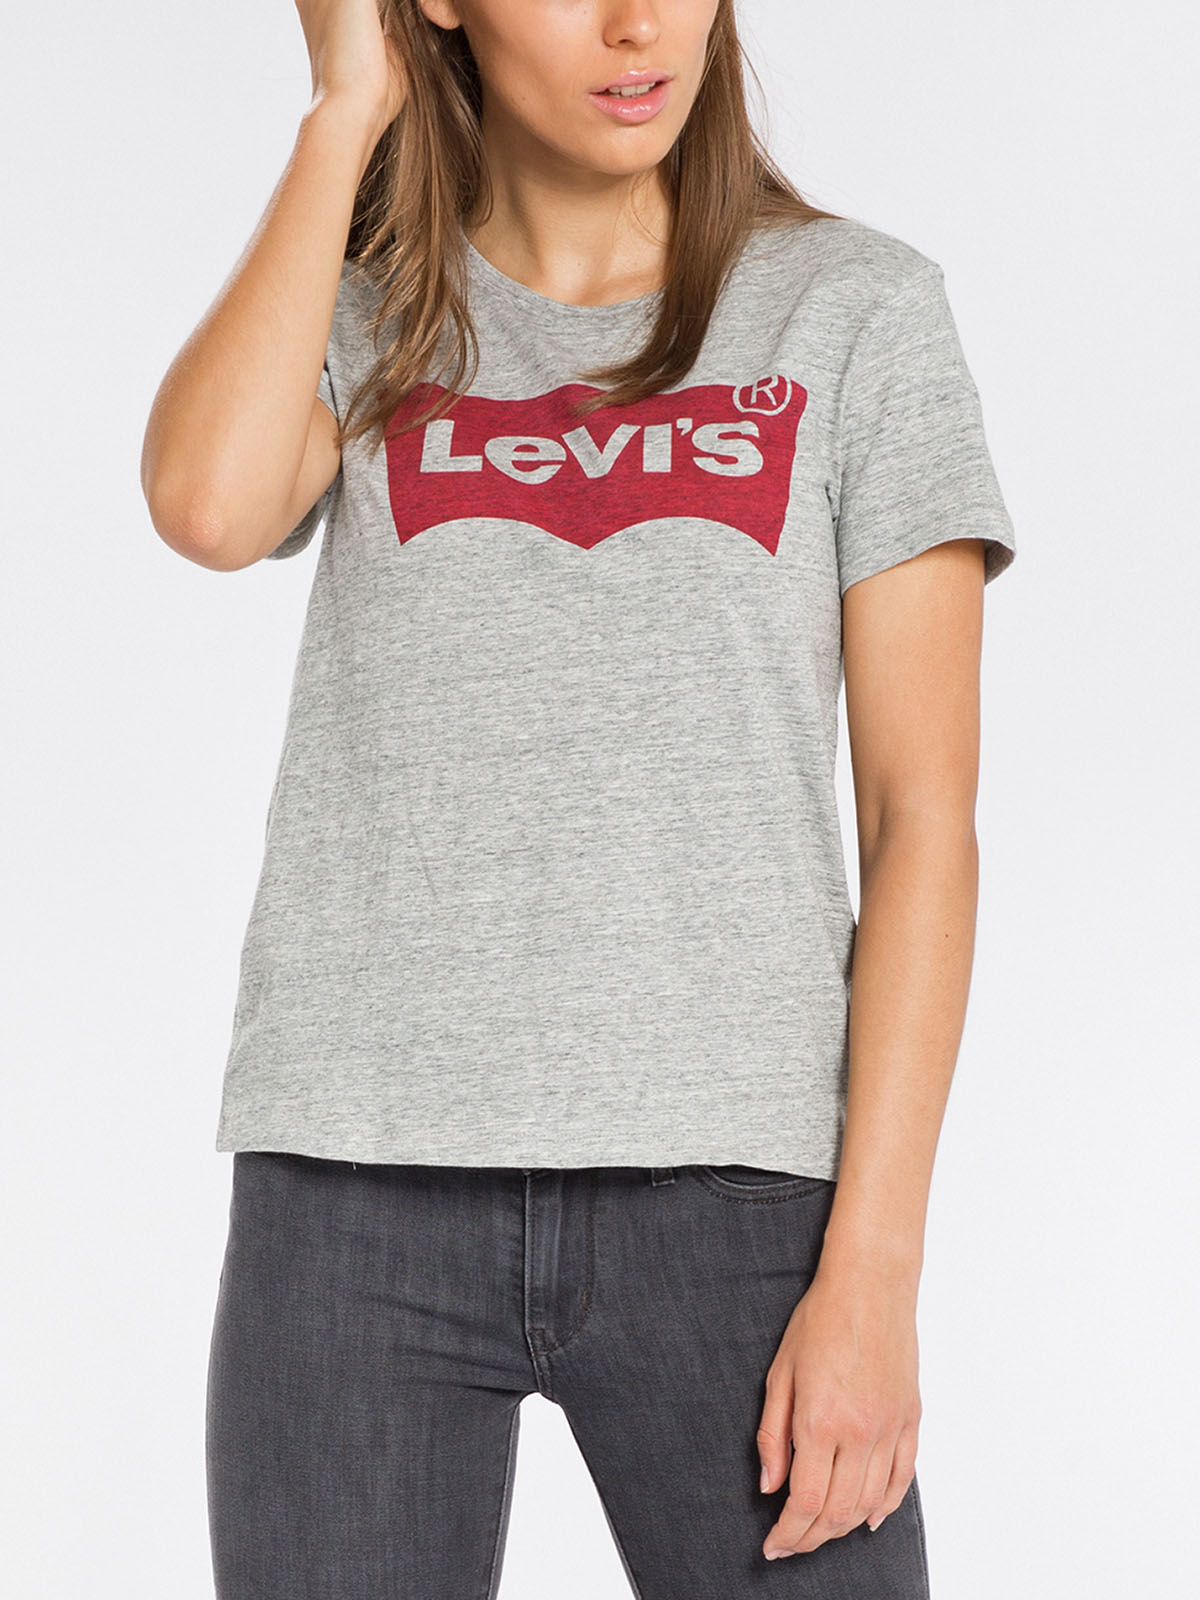 Levi’s® camiseta logo manga corta mujer 17369-0263 gris